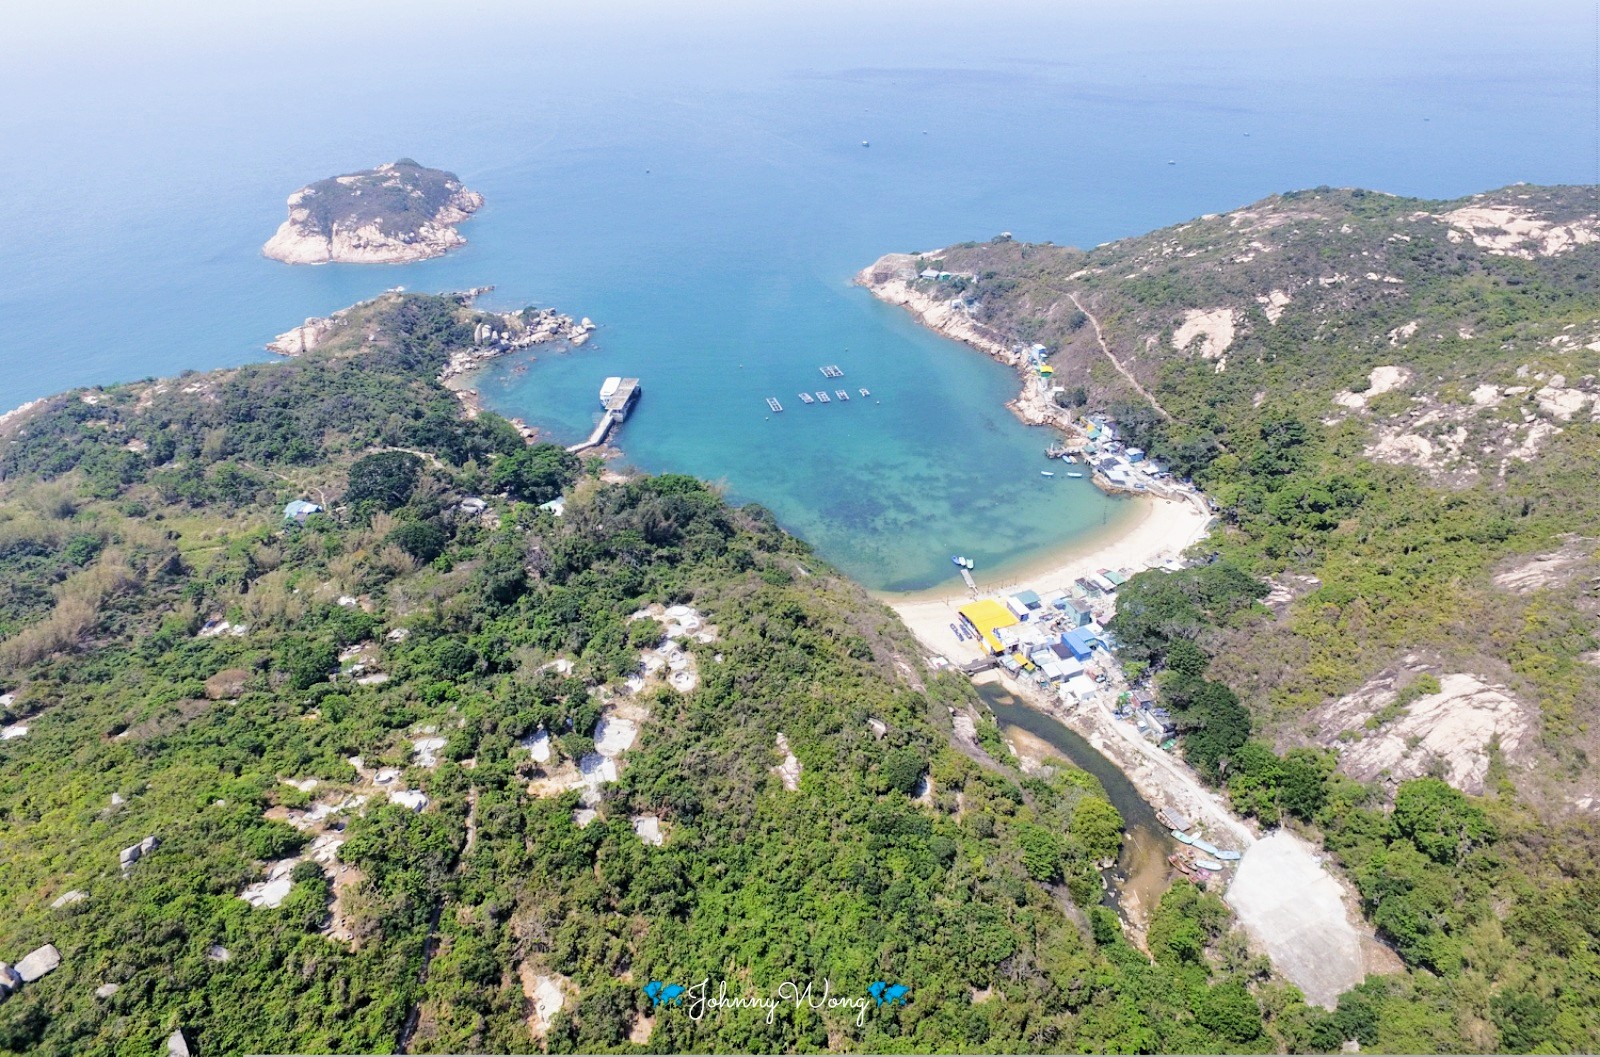 Photo of Po Toi Islands amenities area